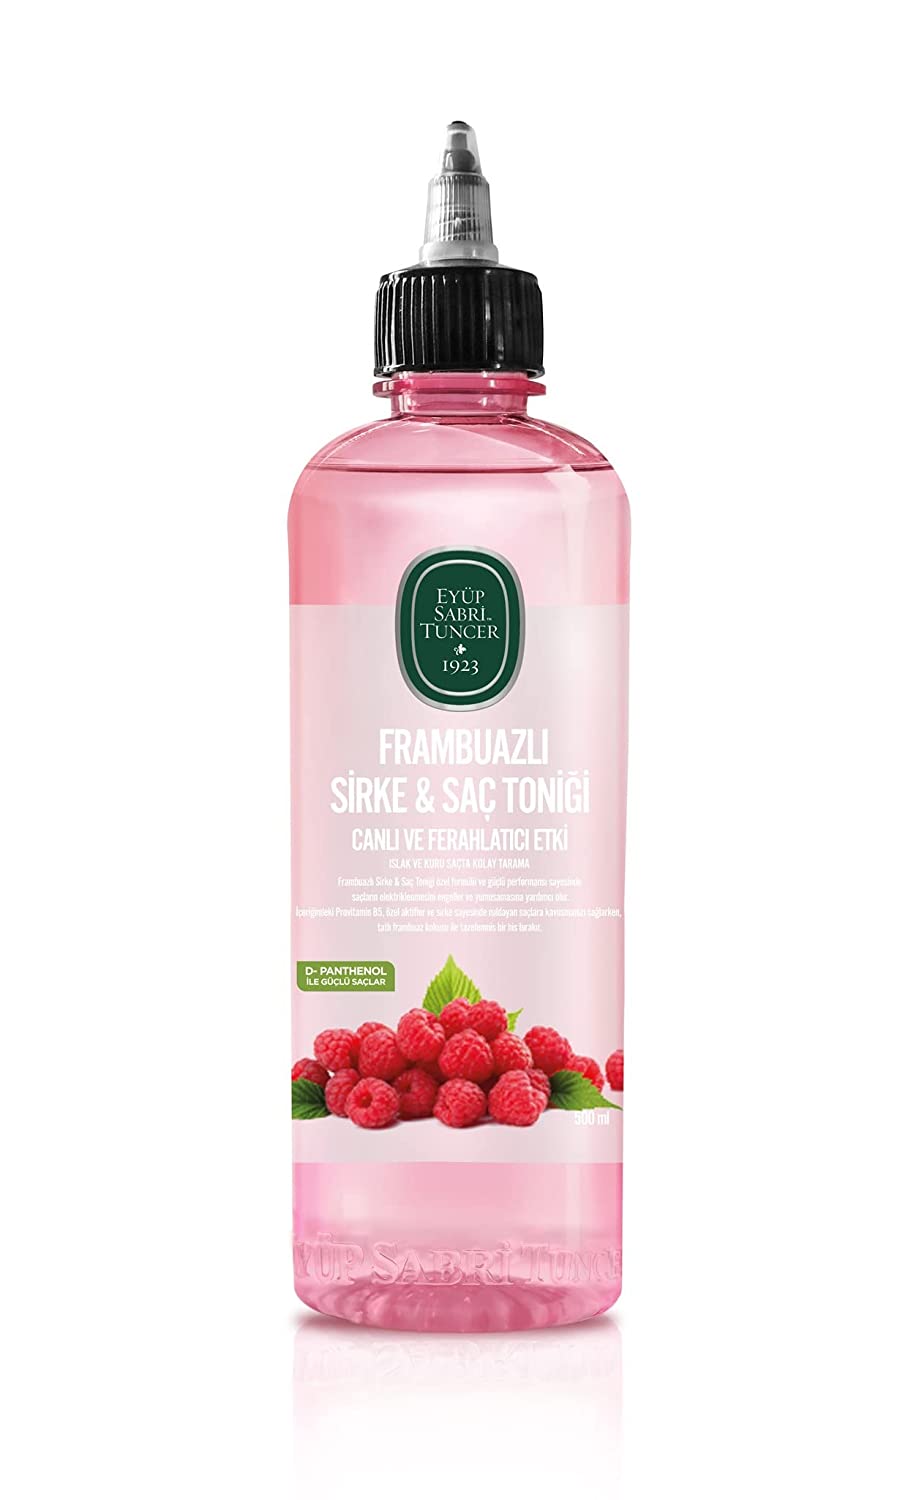 kenparazzi Eyup Sabri Tuncer Raspberry Vinegar & Hair Water 500ml - For Shiny and Healthy Hair - Free from Parabens/Gluten, ‎cream-coloured